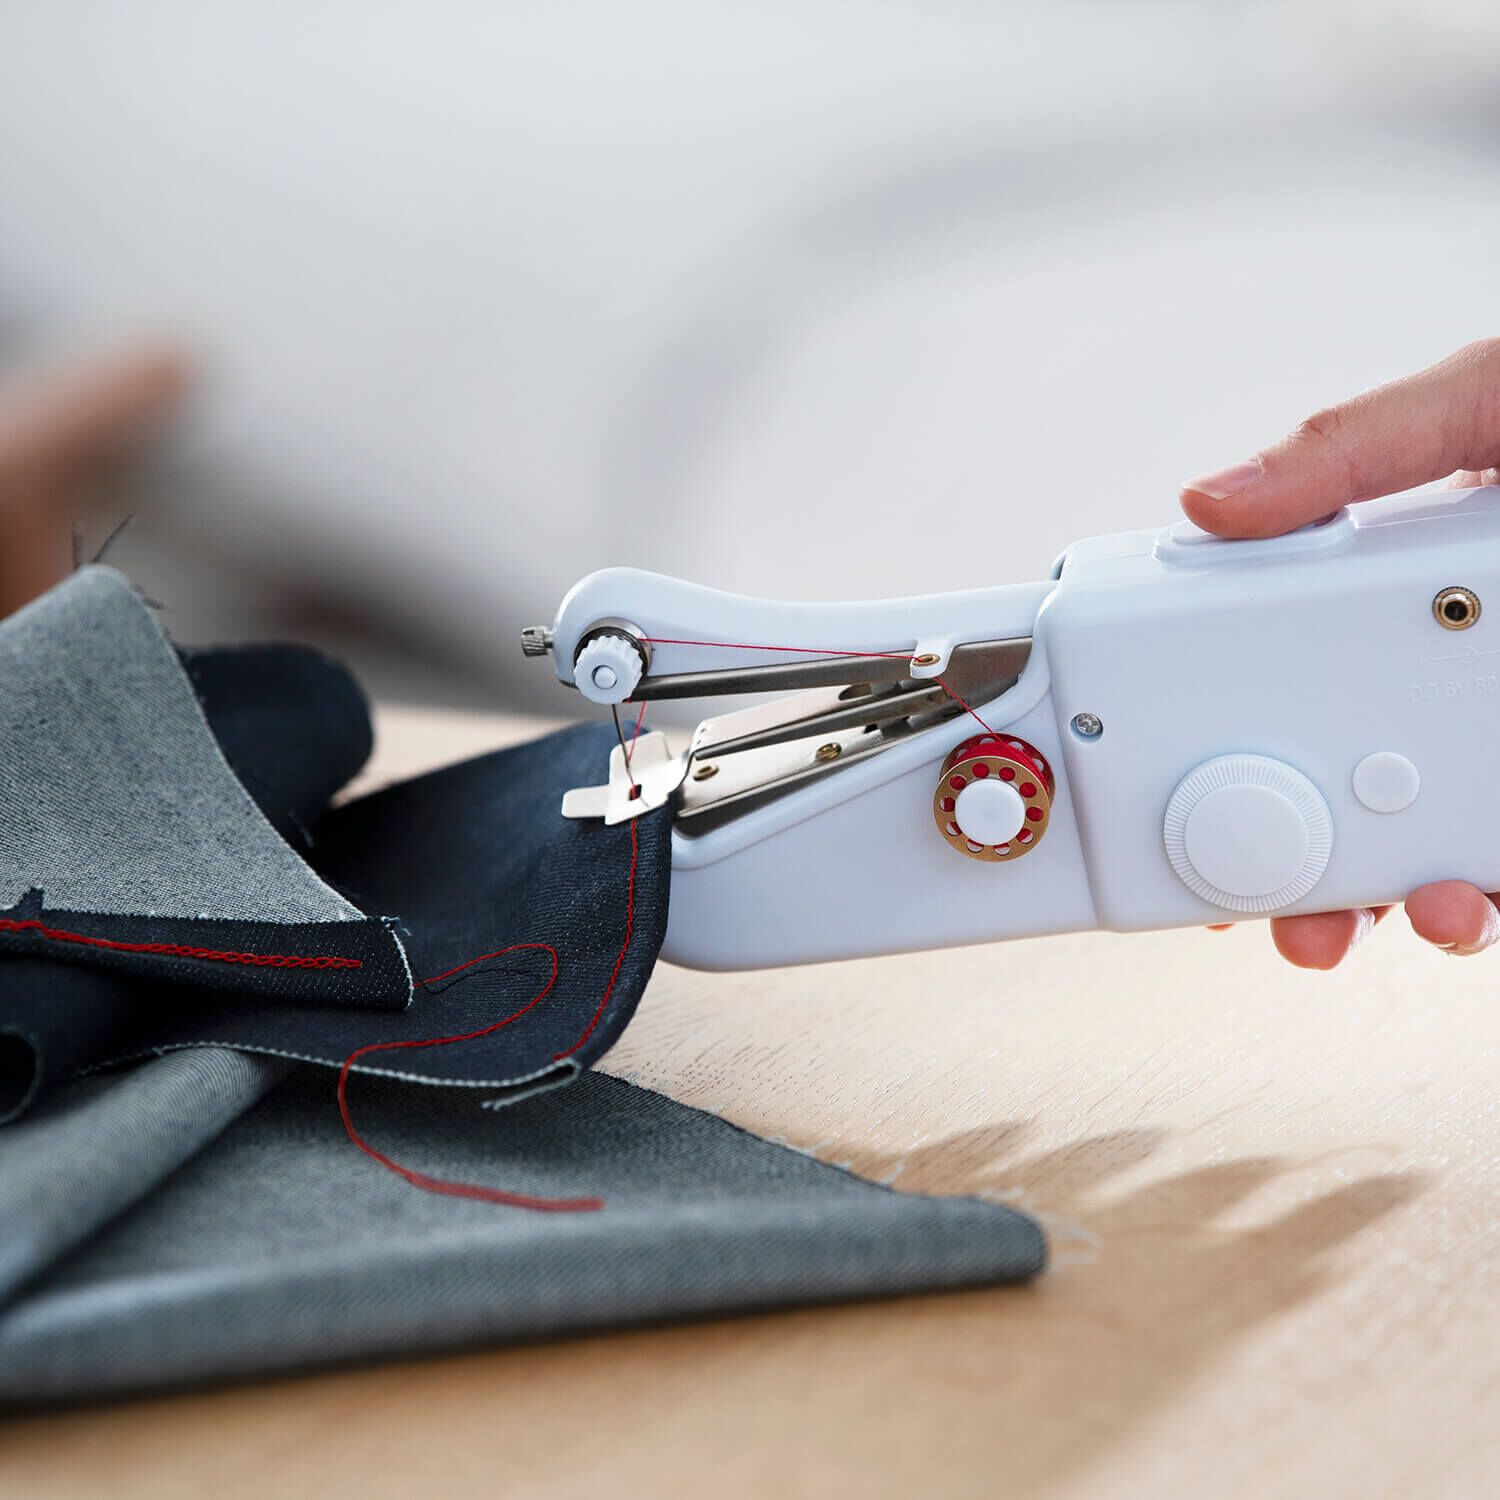 Buy JML Portable Magic Stitch Hand-held Sewing Machine, Sewing machines